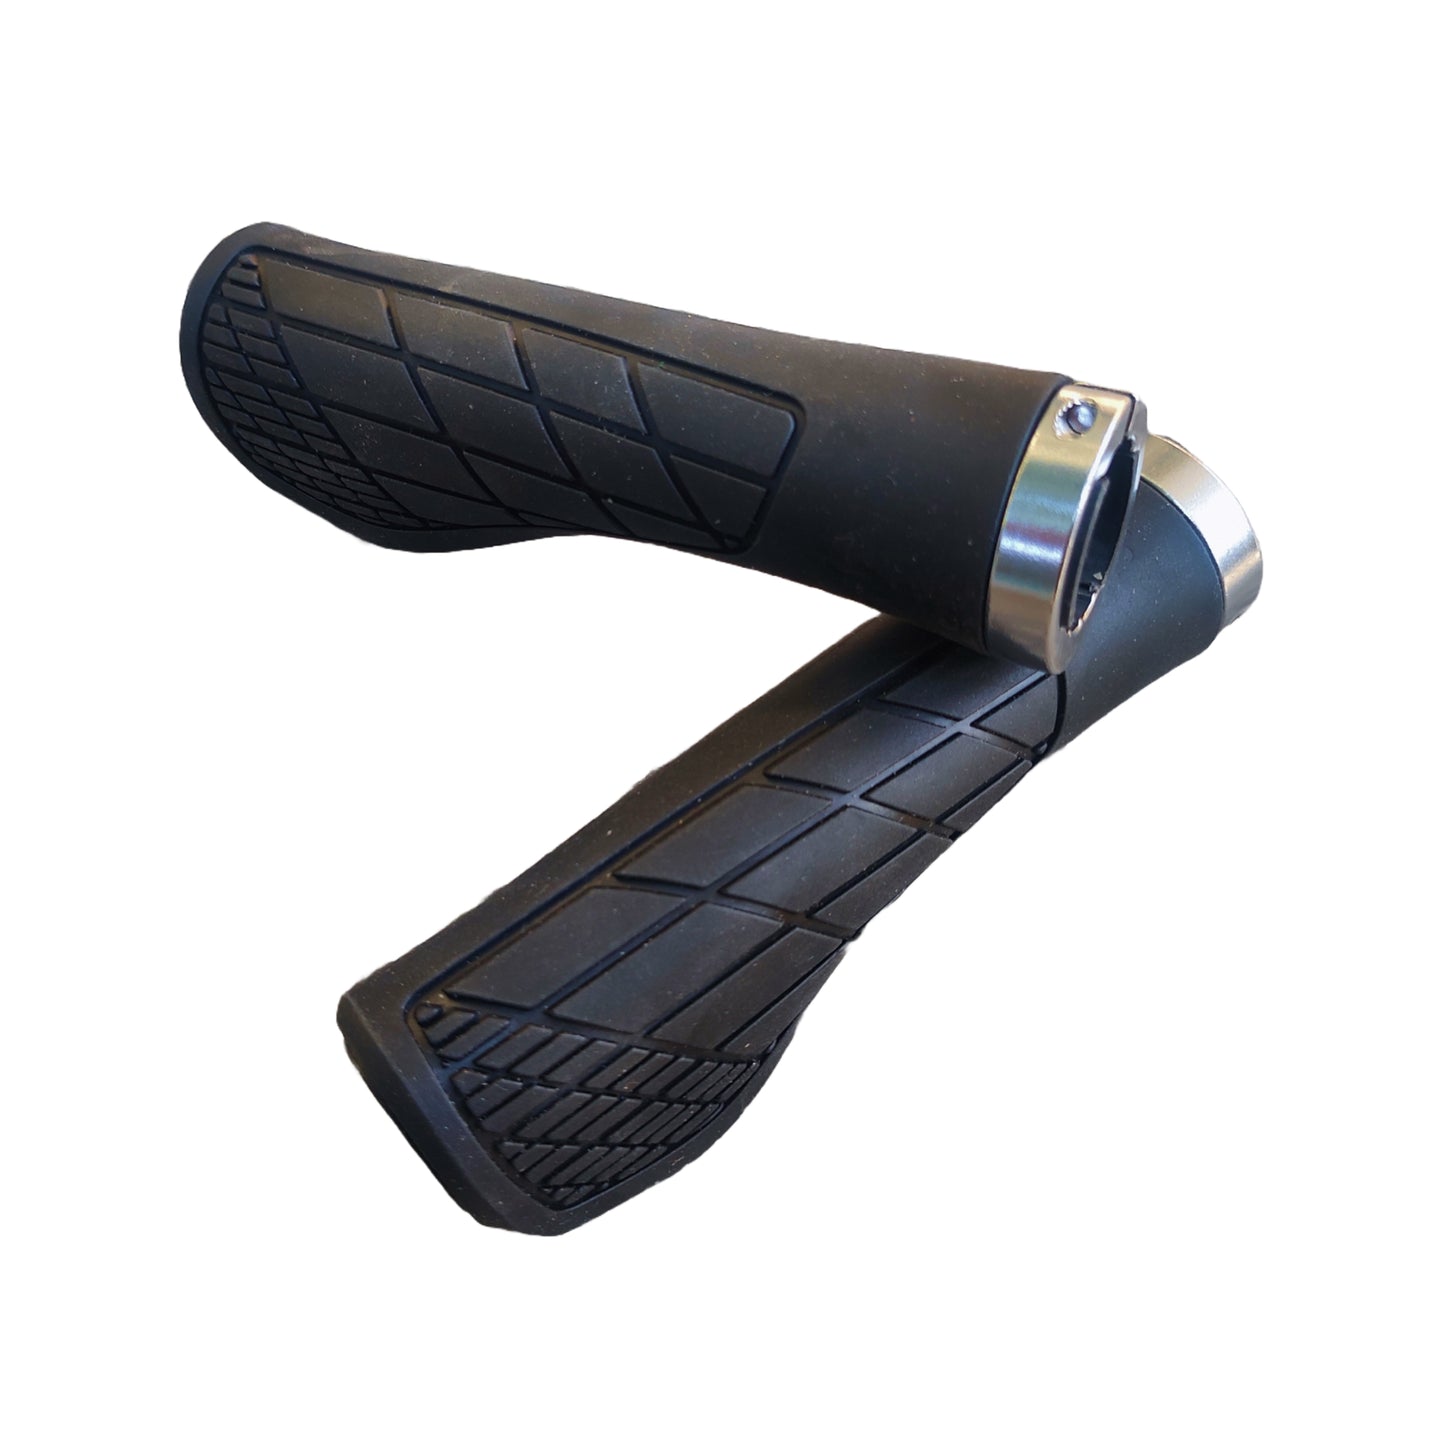 Ergonomic Grip with wrist support| Anti-Slip Lock-on Handlebar Grip